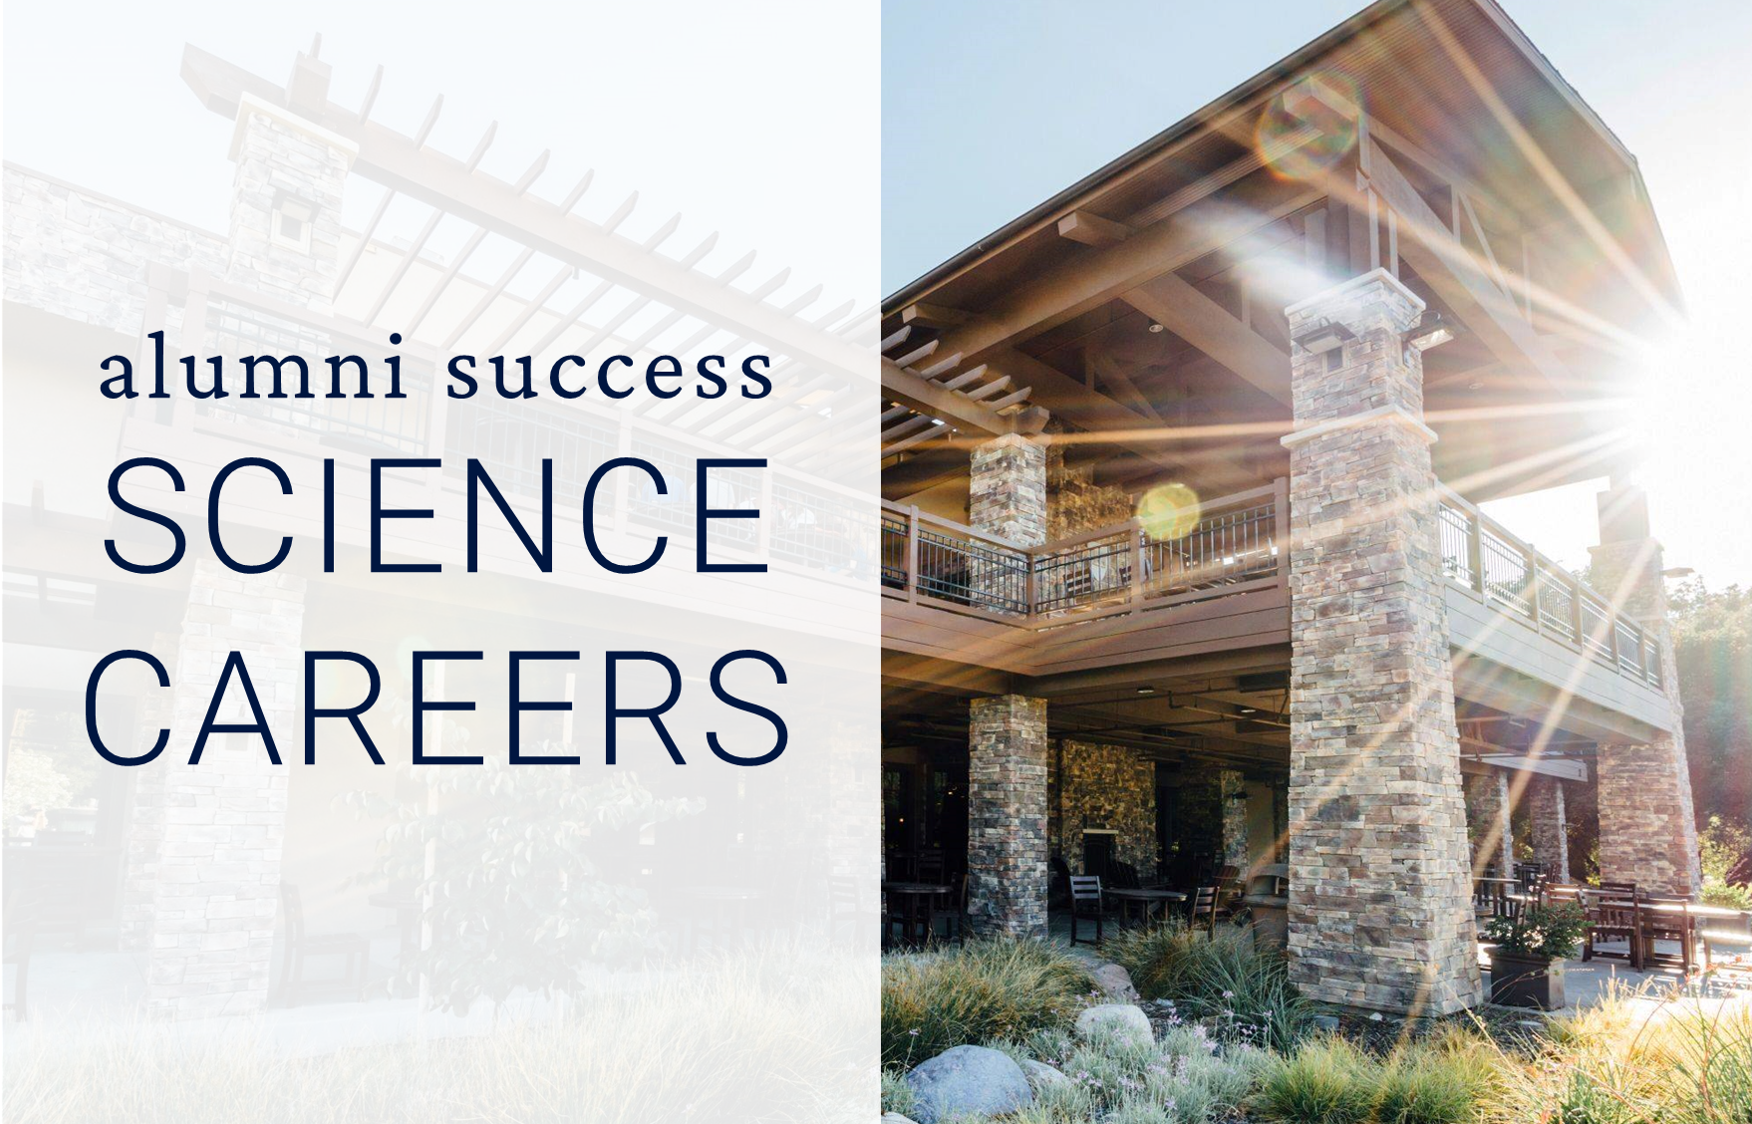 Career Success for Science Alumni